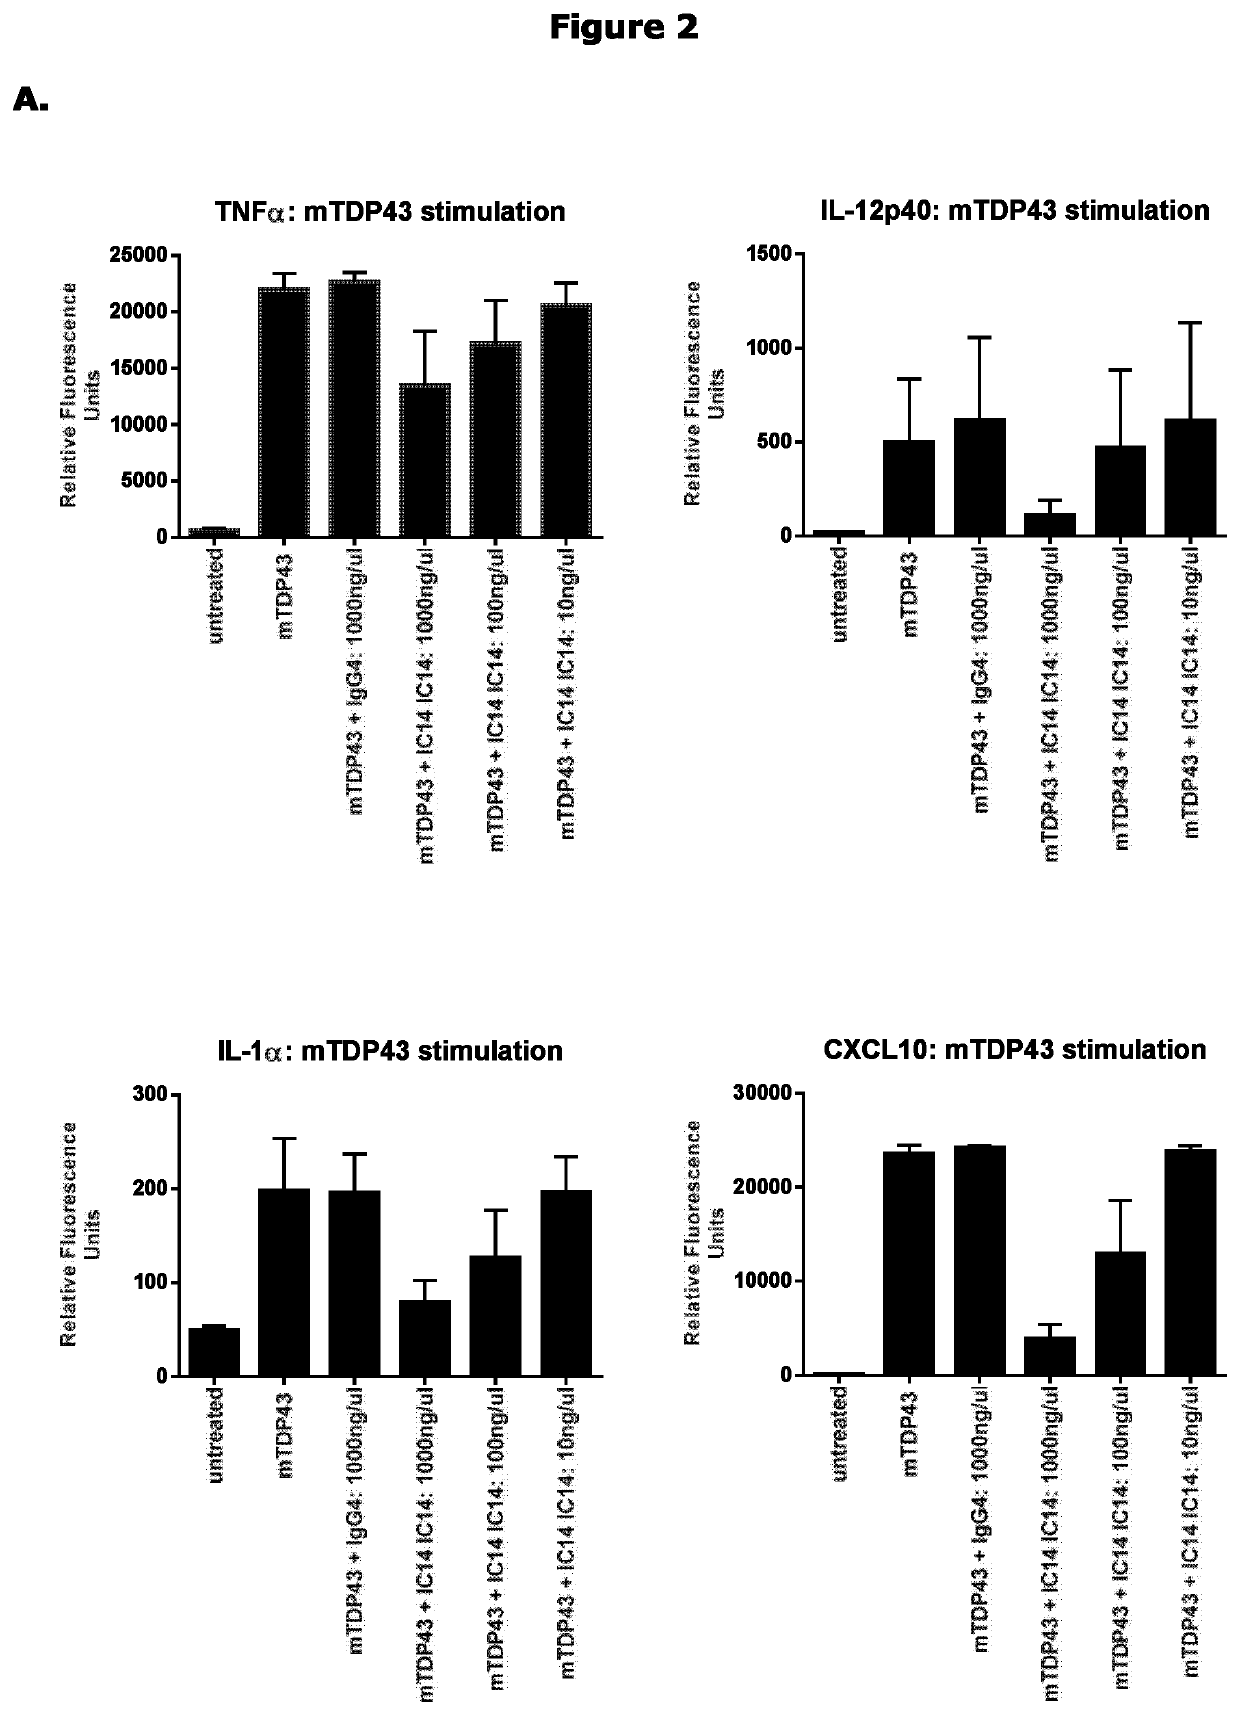 CD 14 antagonist antibodies for treating neurodegenerative diseases